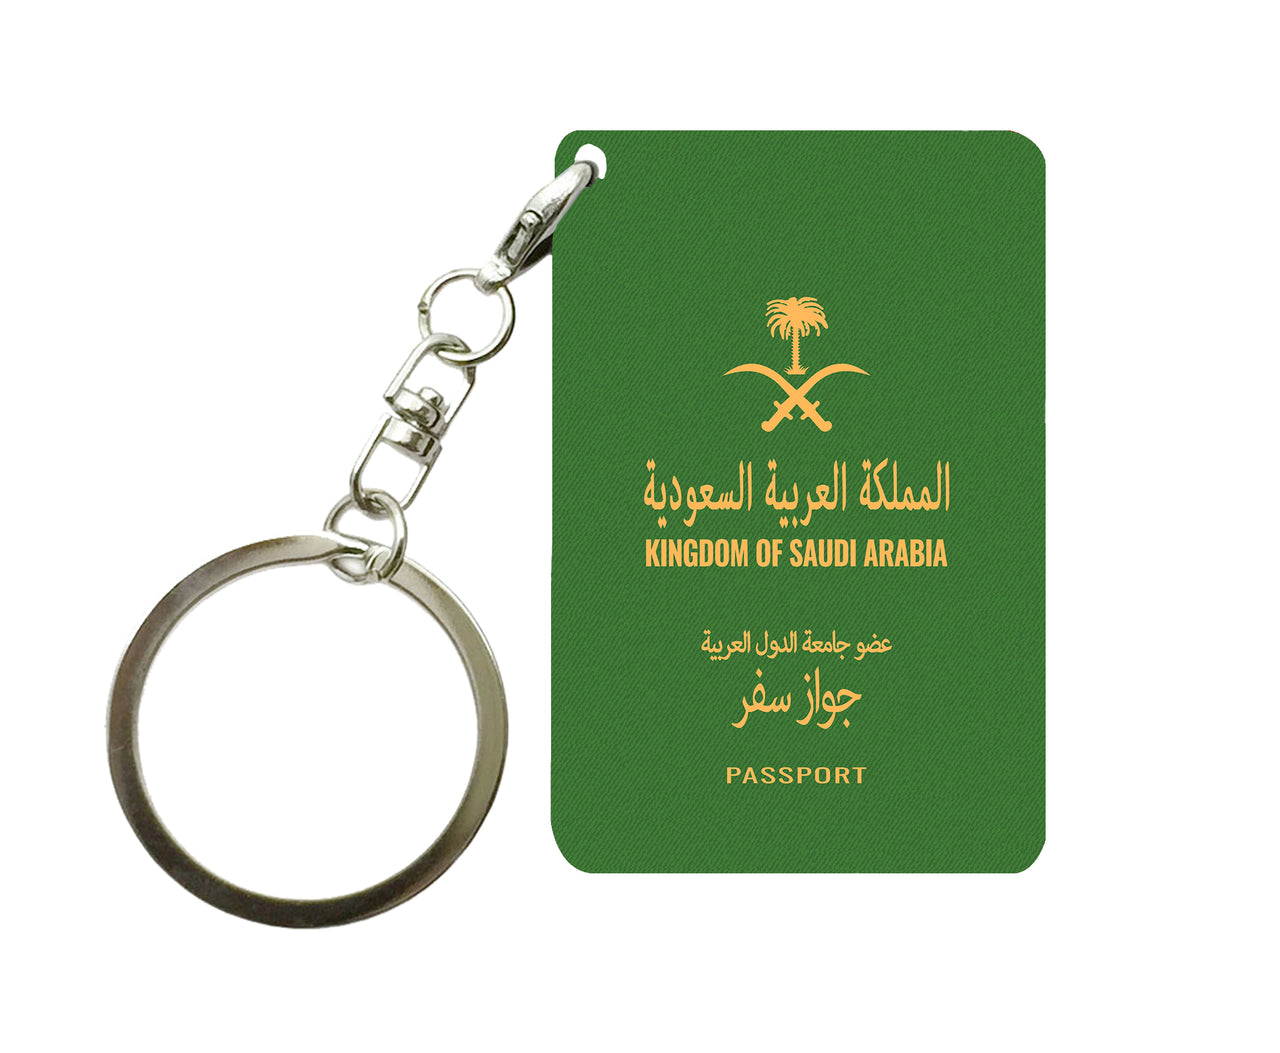 Kindgom Of Saudi Arabia Passport Designed Key Chains